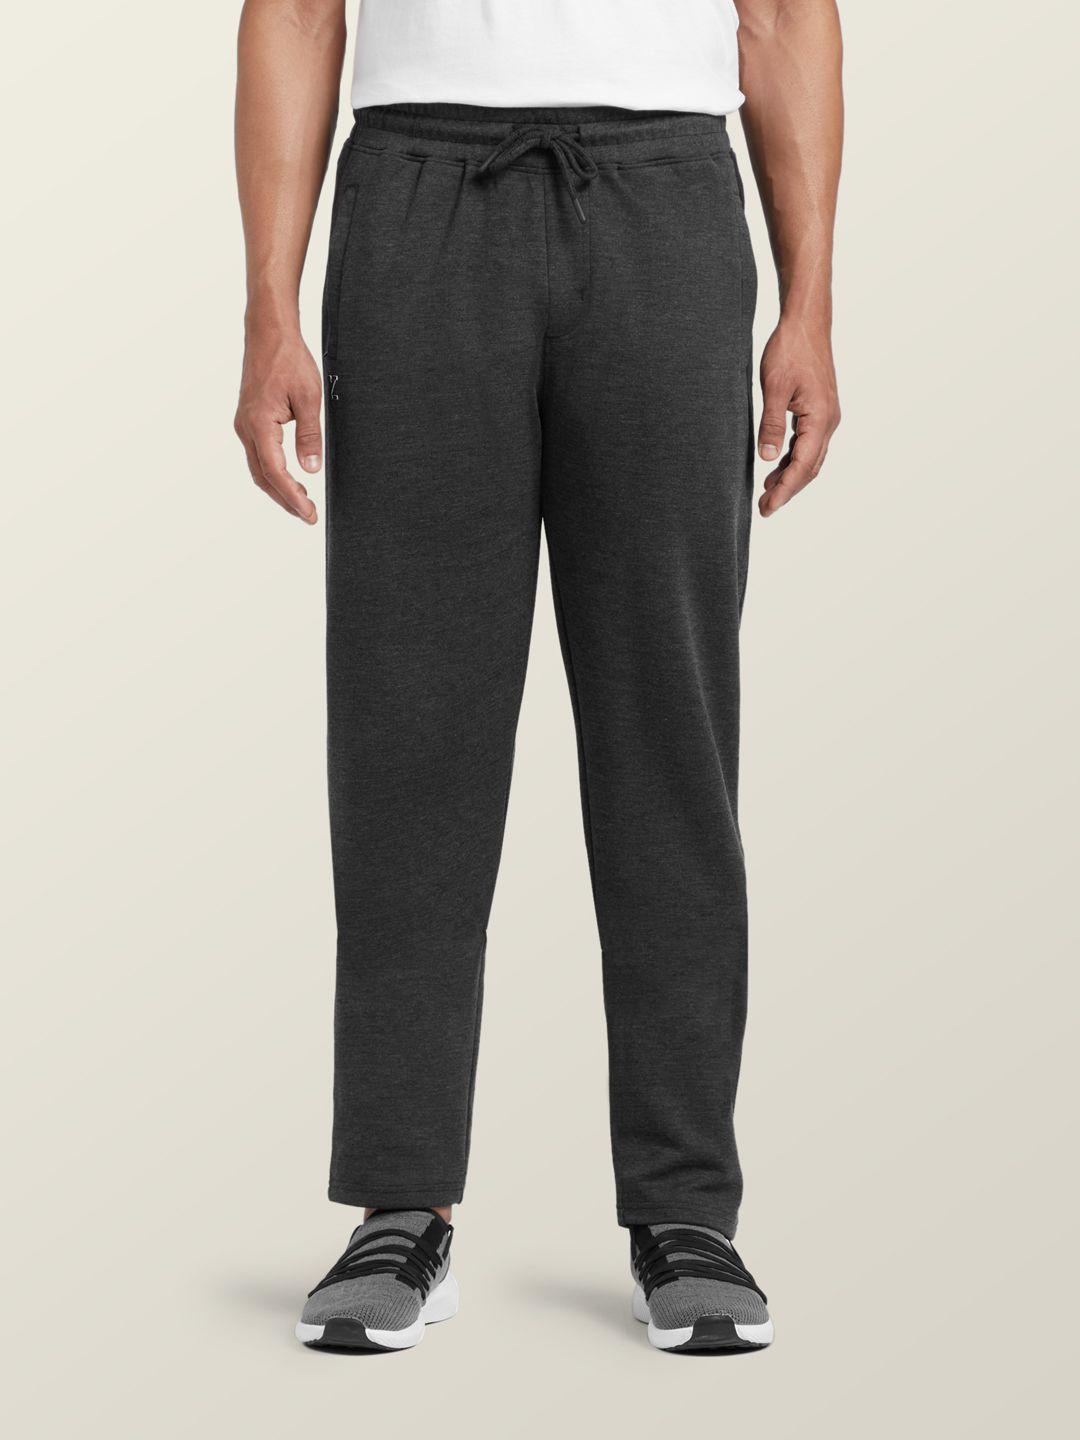 xyxx-men-grey-solid-track-pants-with-zipper-pocket